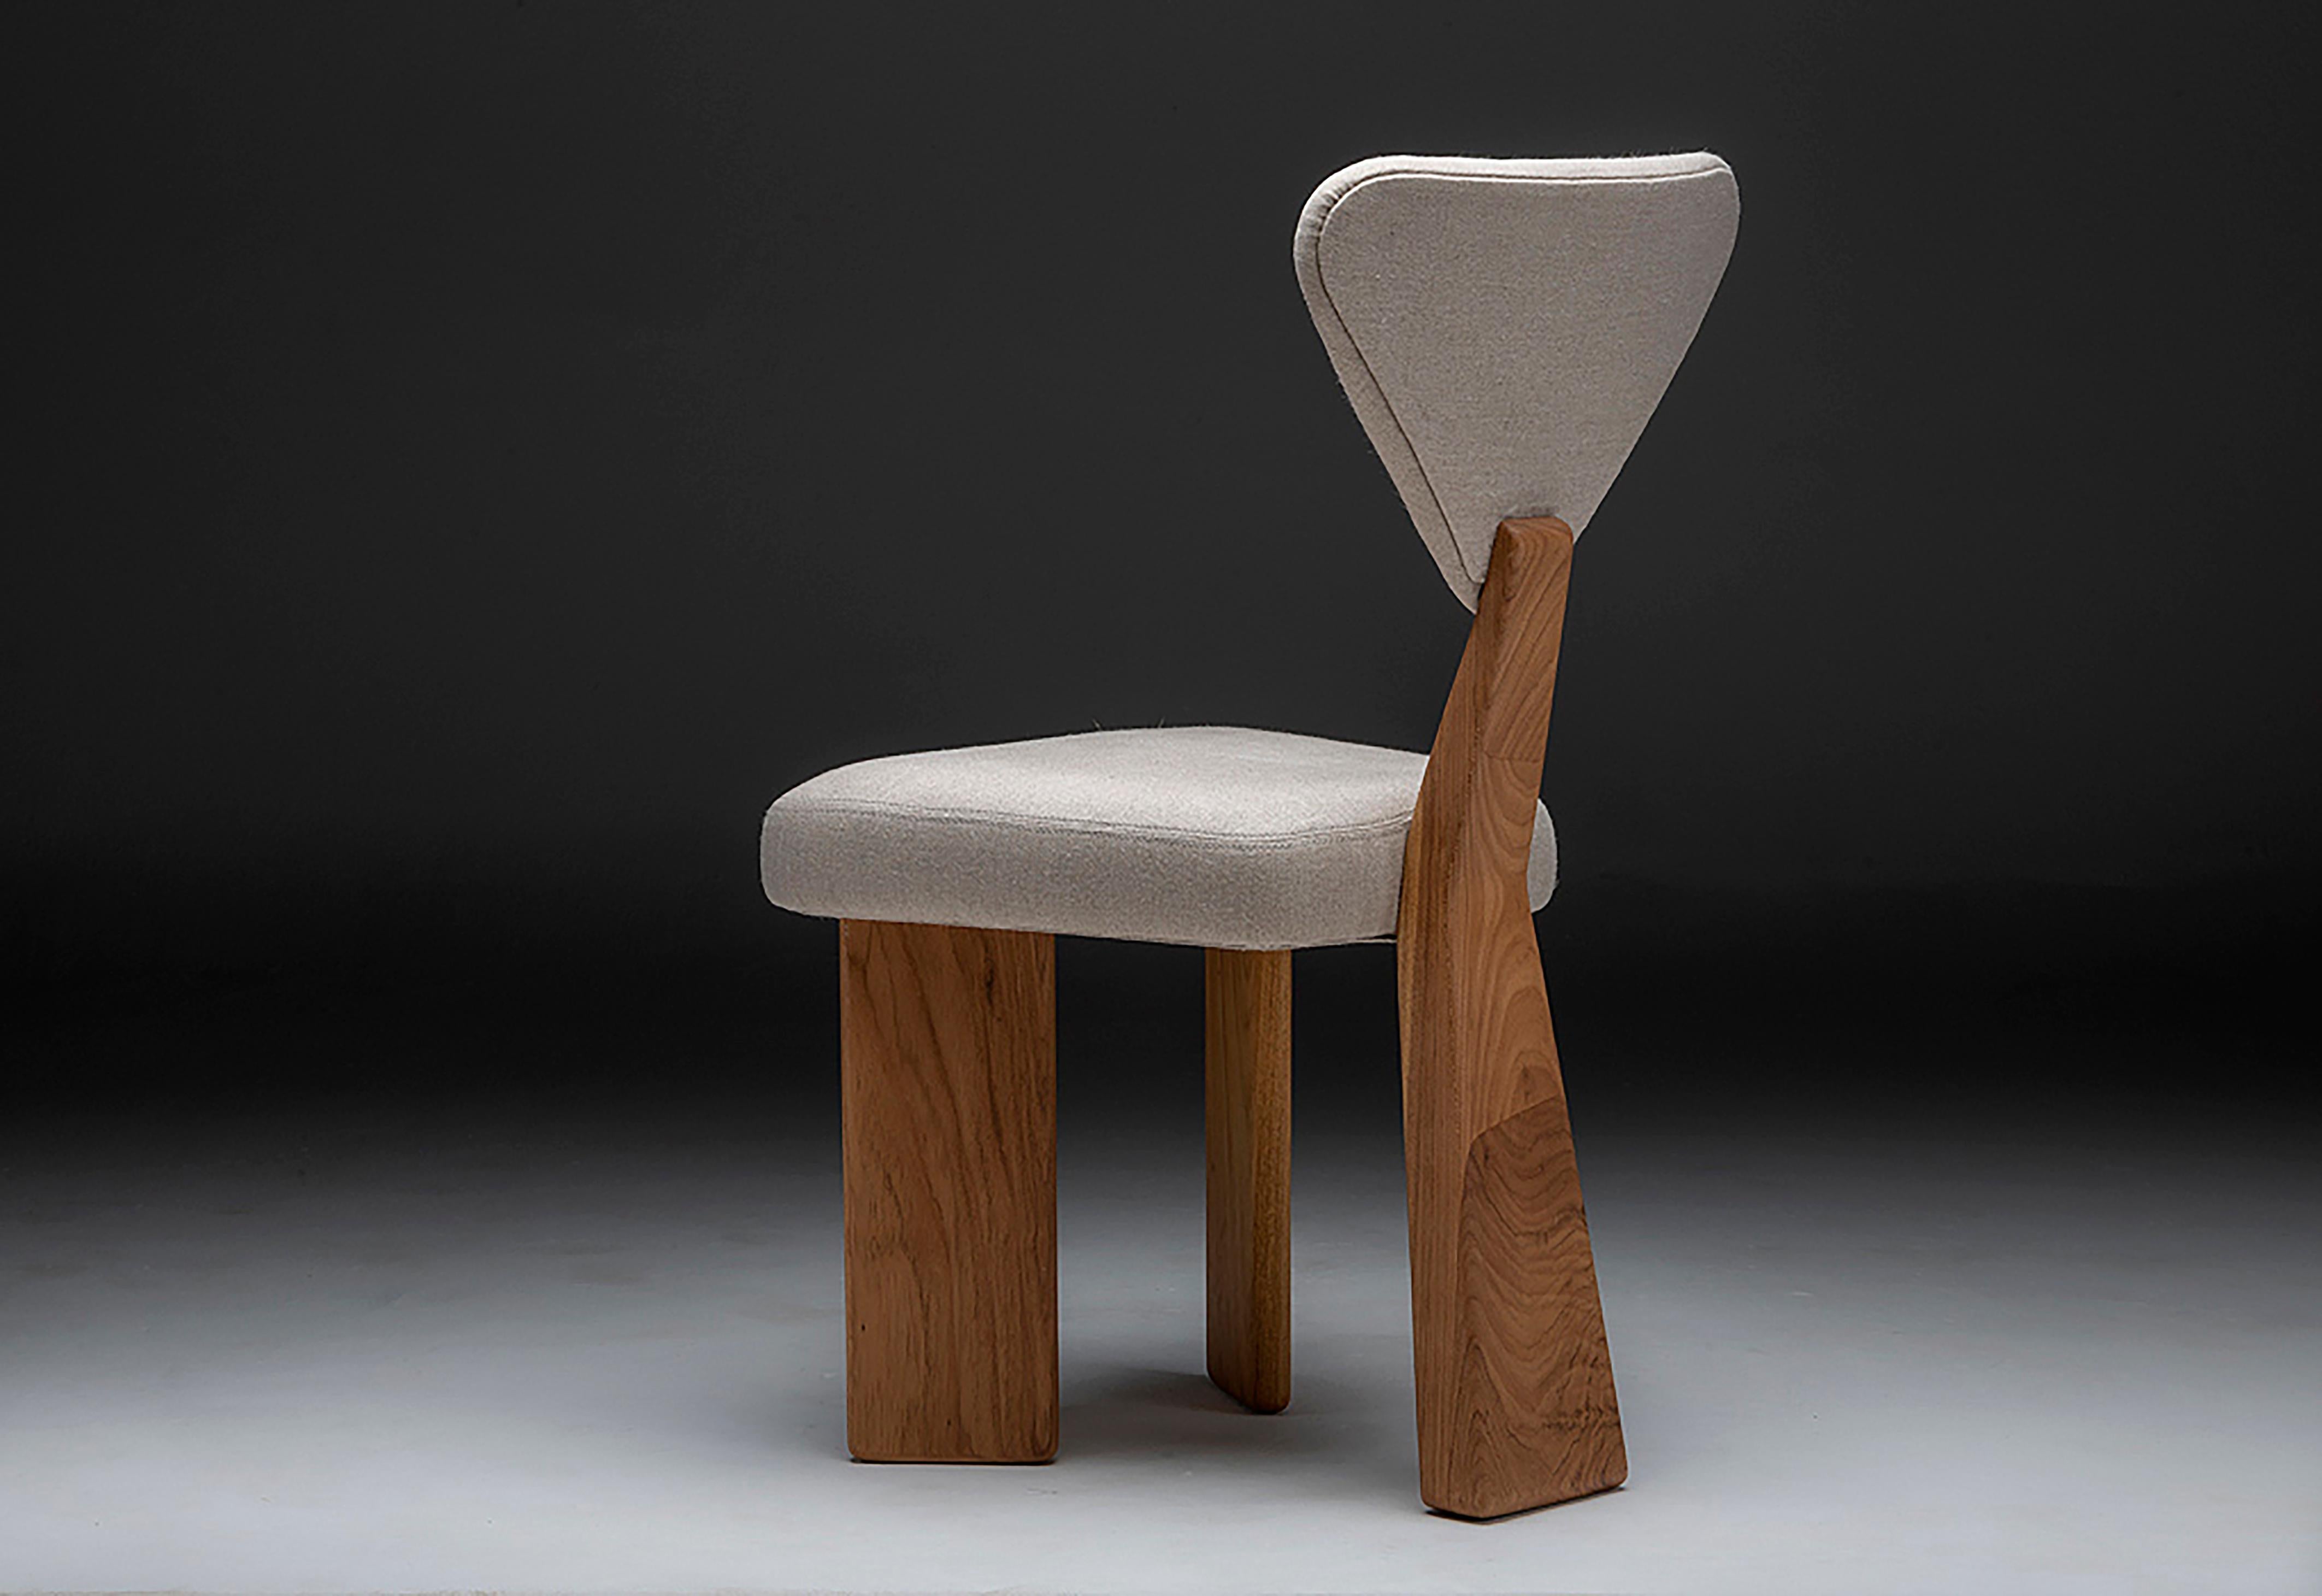 A set of  Giraffe Chair in Solid Brazilian Walnut Wood by Juliana Vasconcellos 5